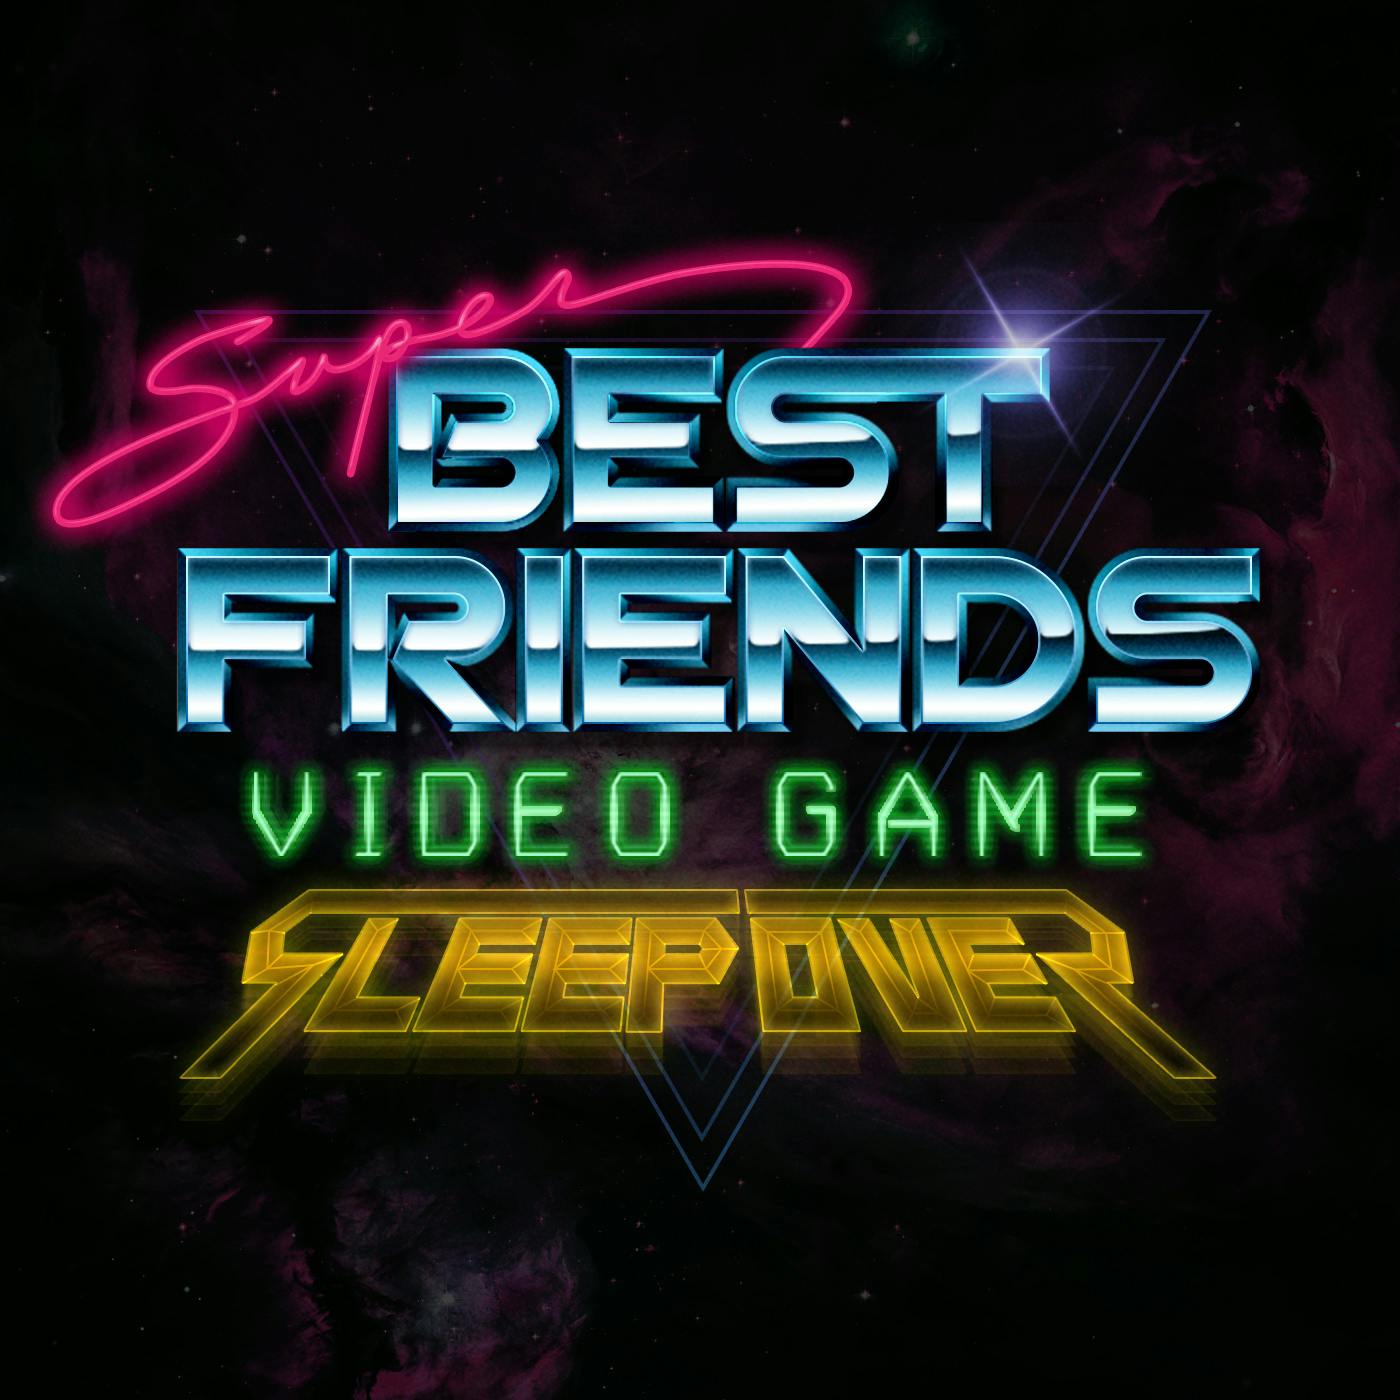 Super Best Friends Video Game Sleepover - Episode 34